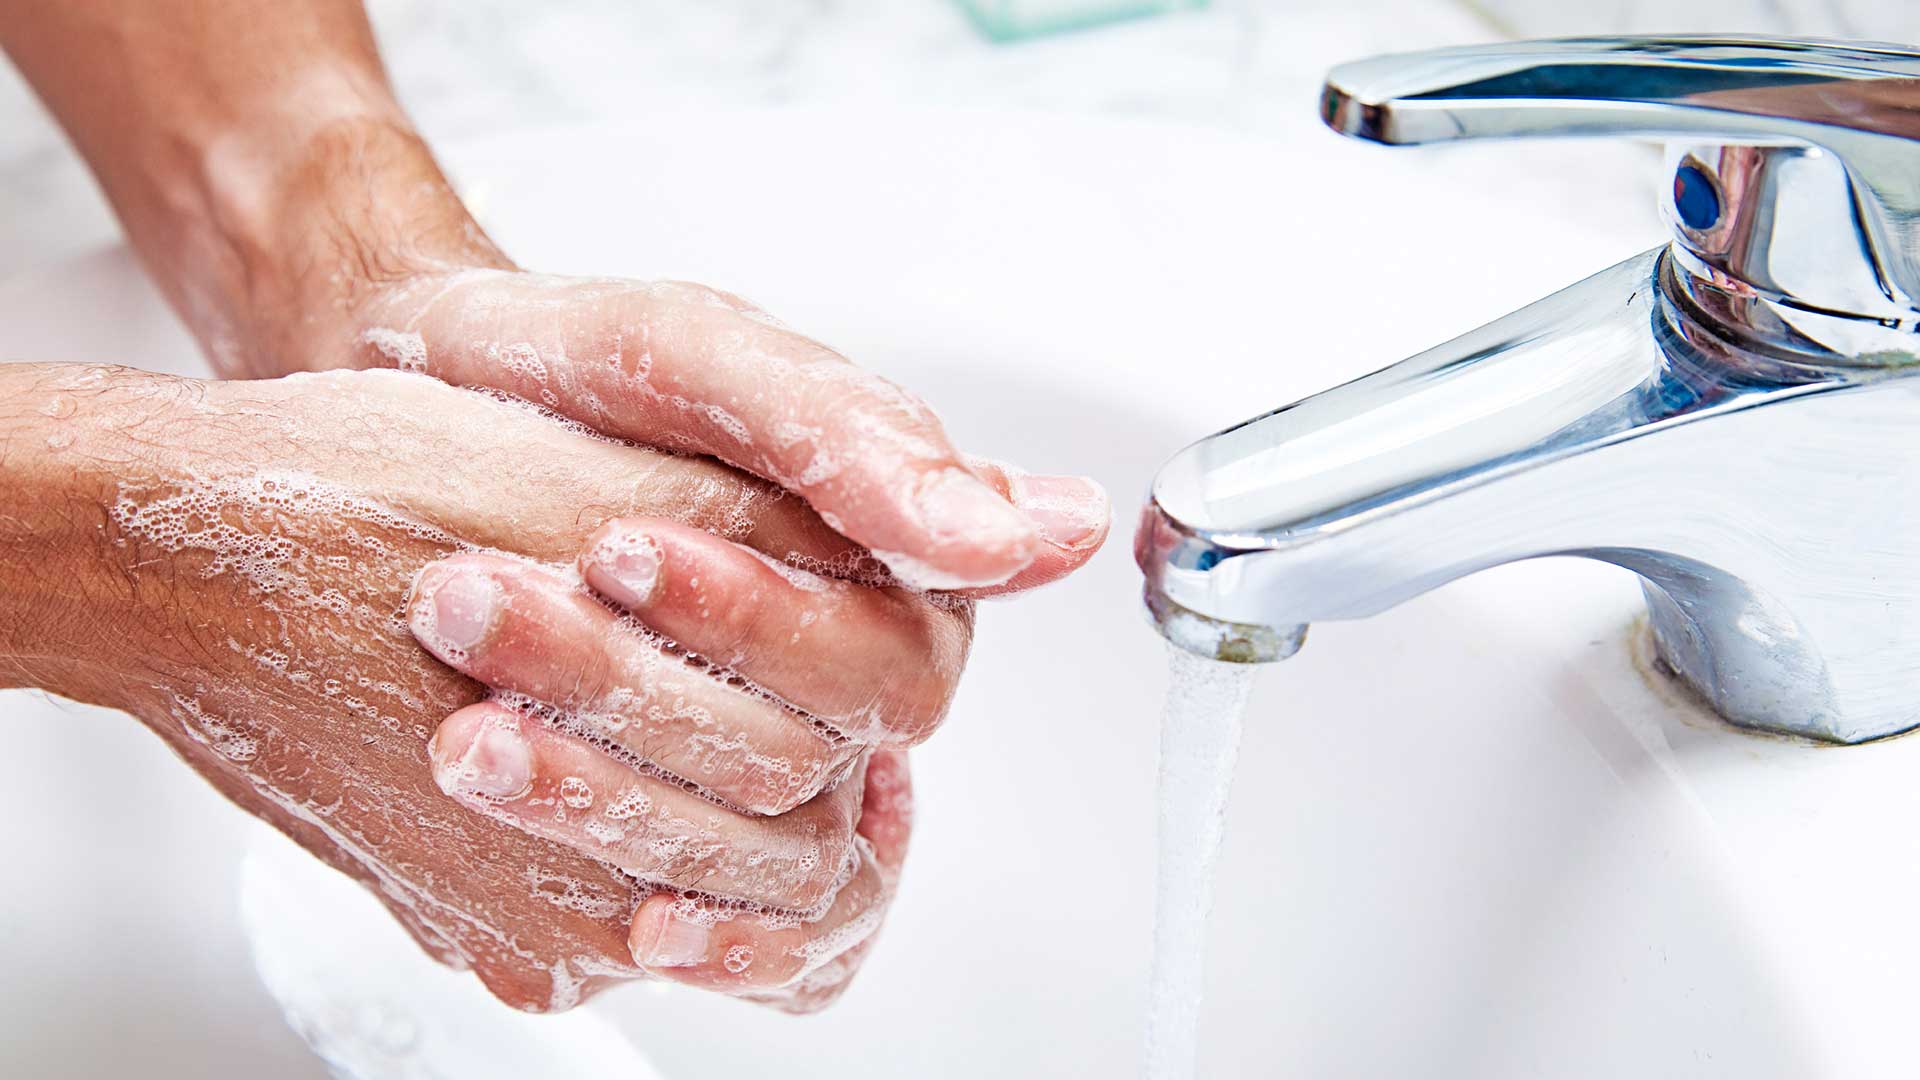 Hand washing photo